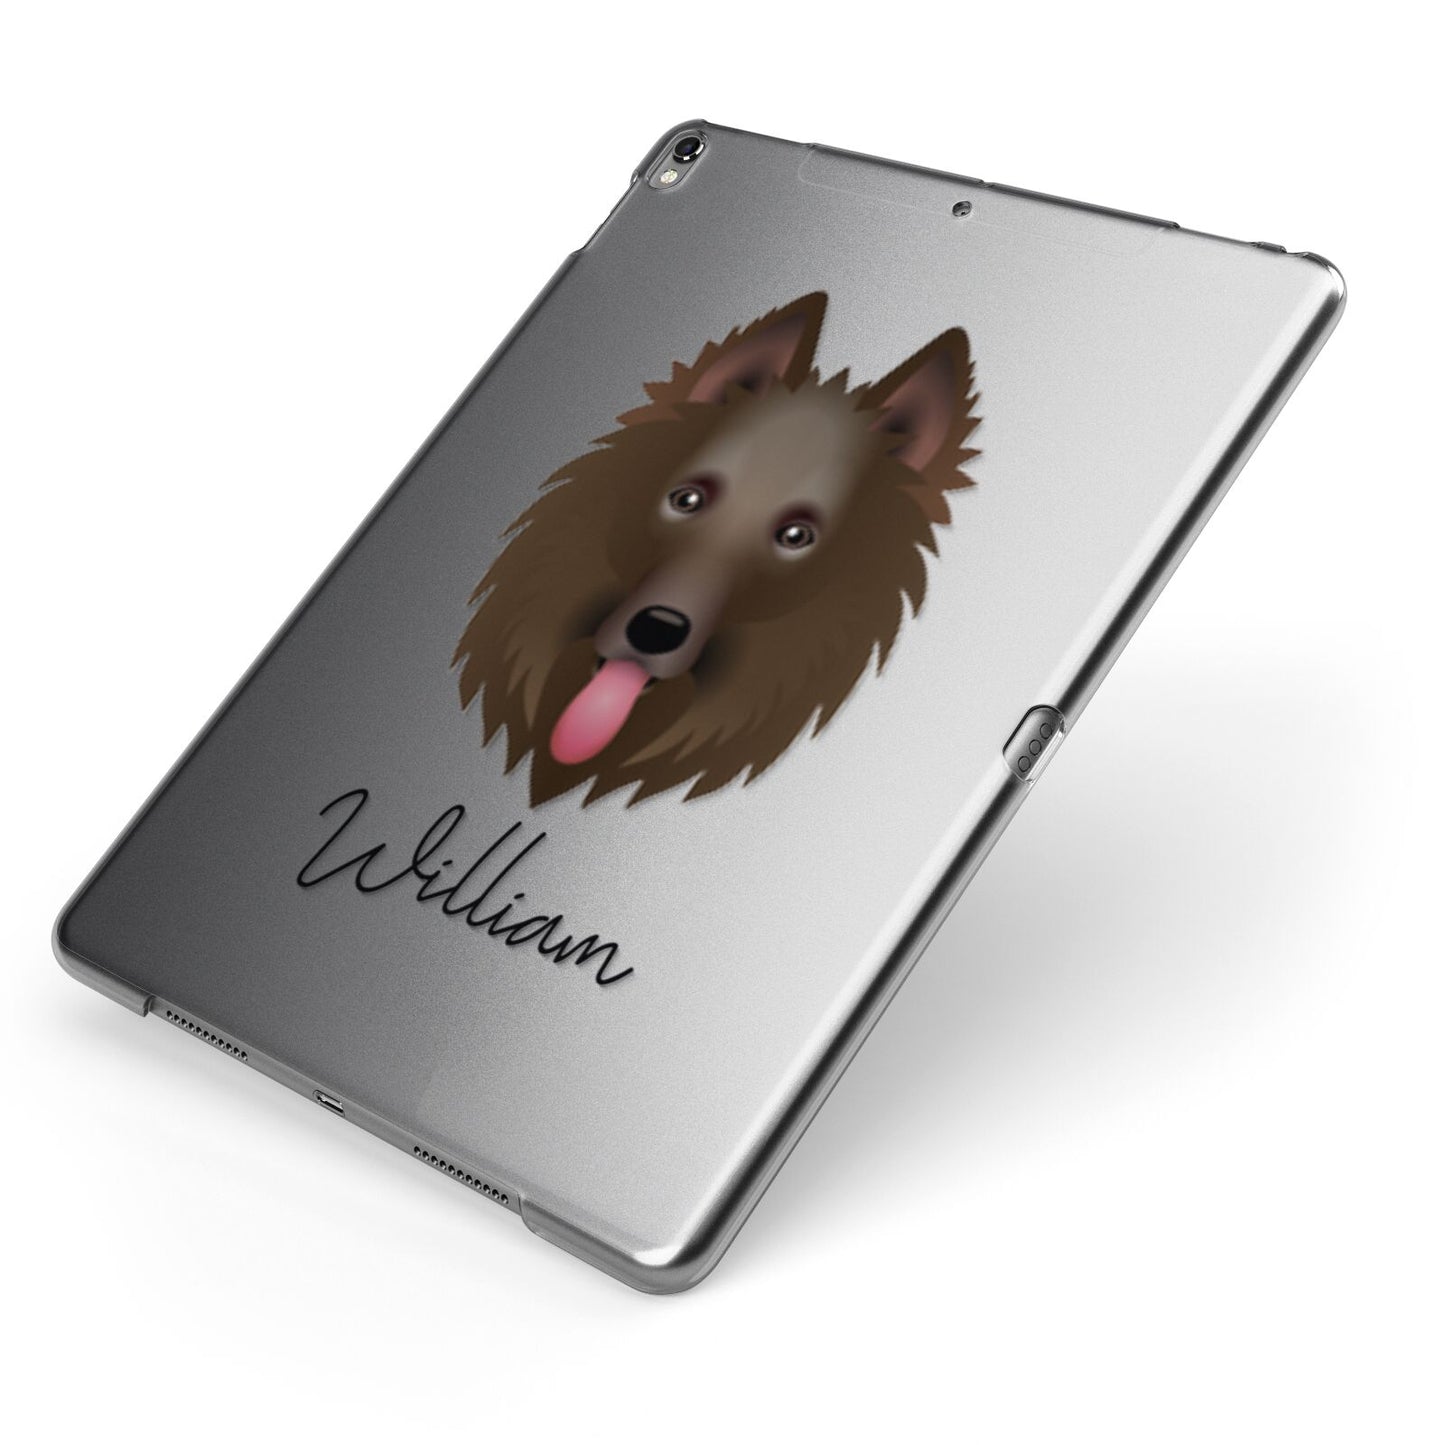 Belgian Shepherd Personalised Apple iPad Case on Grey iPad Side View